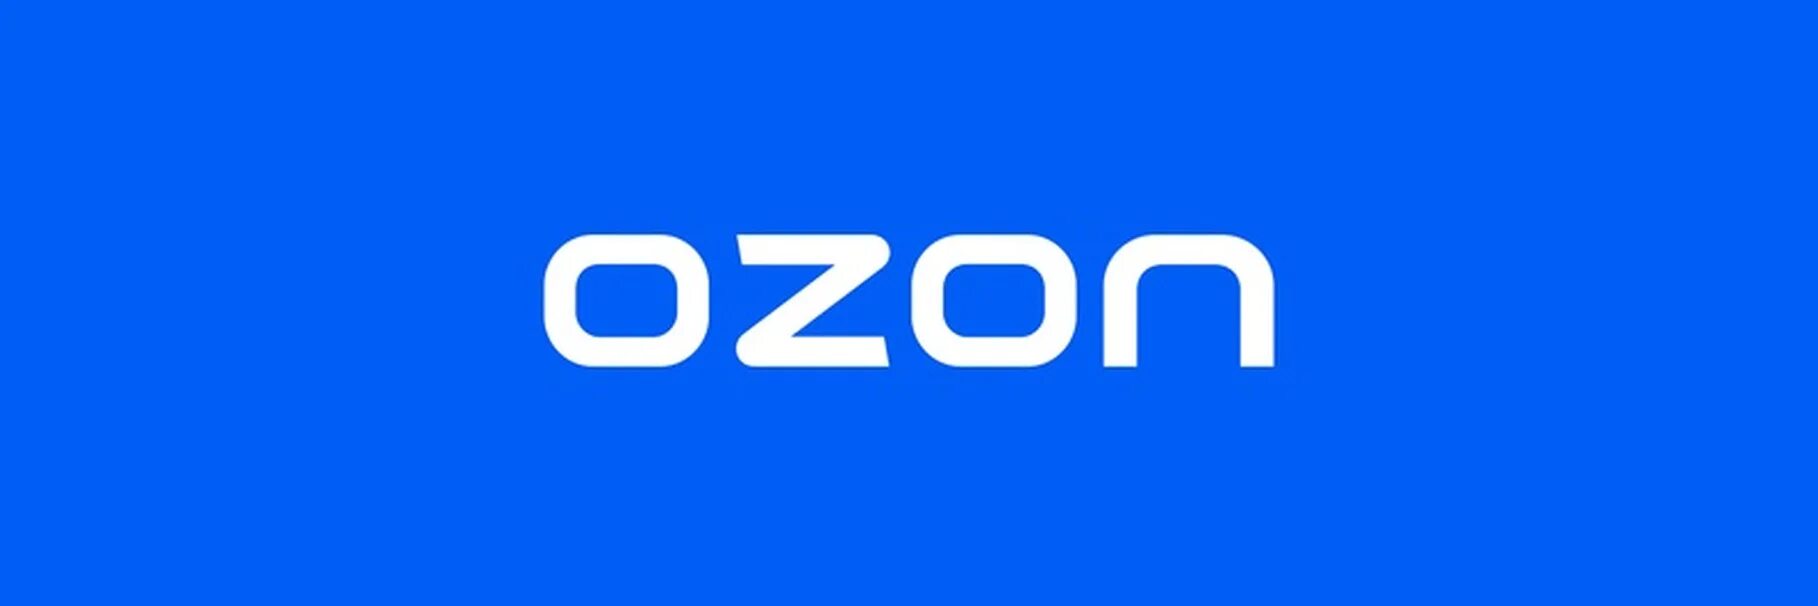 OZON. OZON логотип. Надпись Озон. Логотип Озон квадратный.